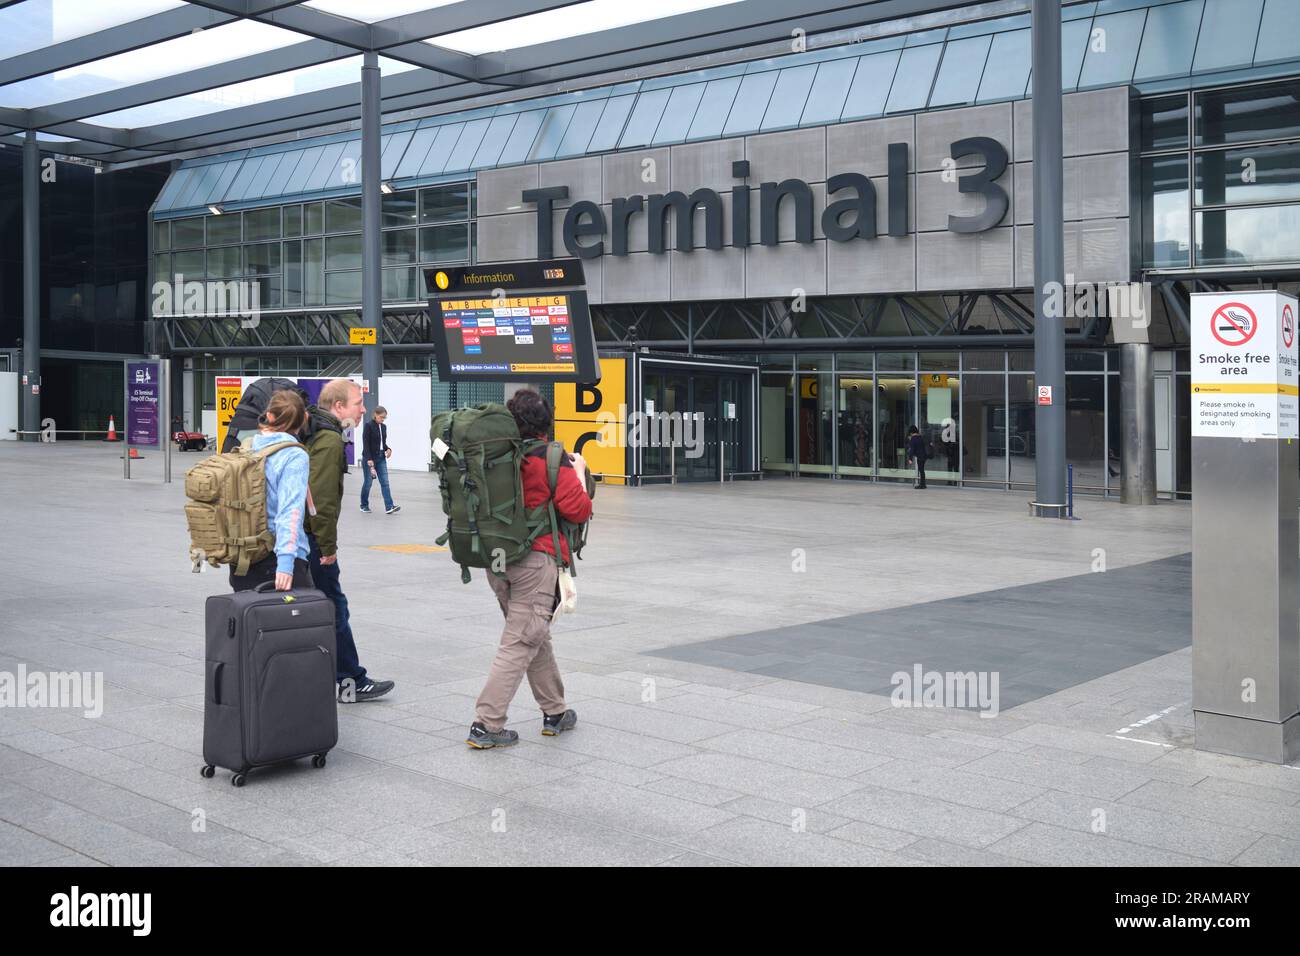 Terminal 3 Heathrow Airport London England UK Stock Photo